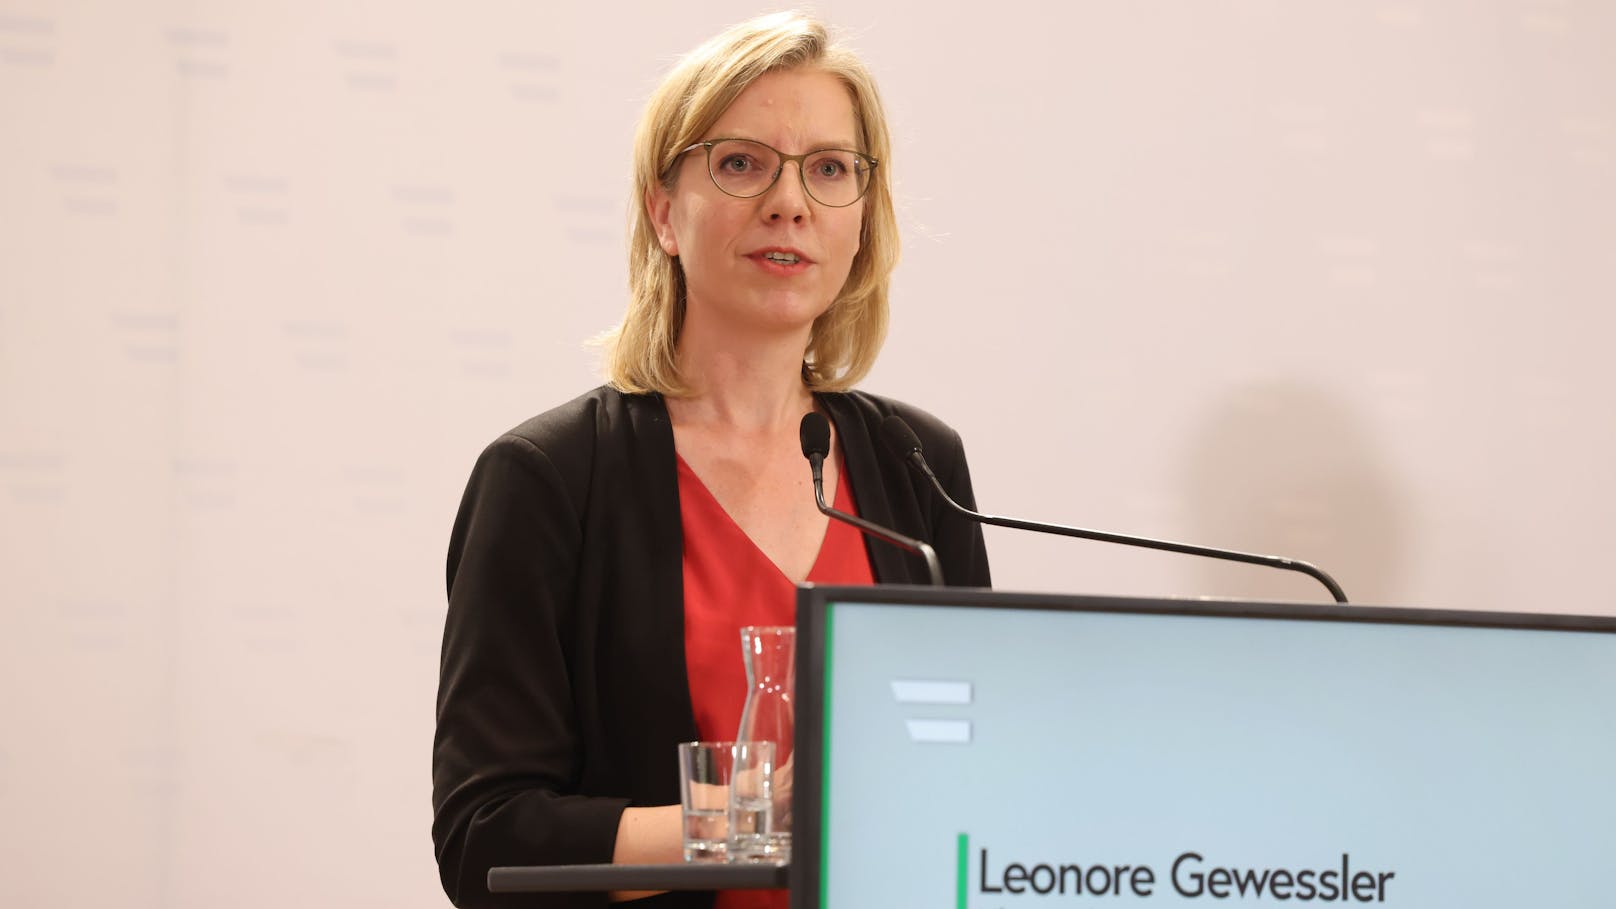 Umweltministerin Leonore Gewessler